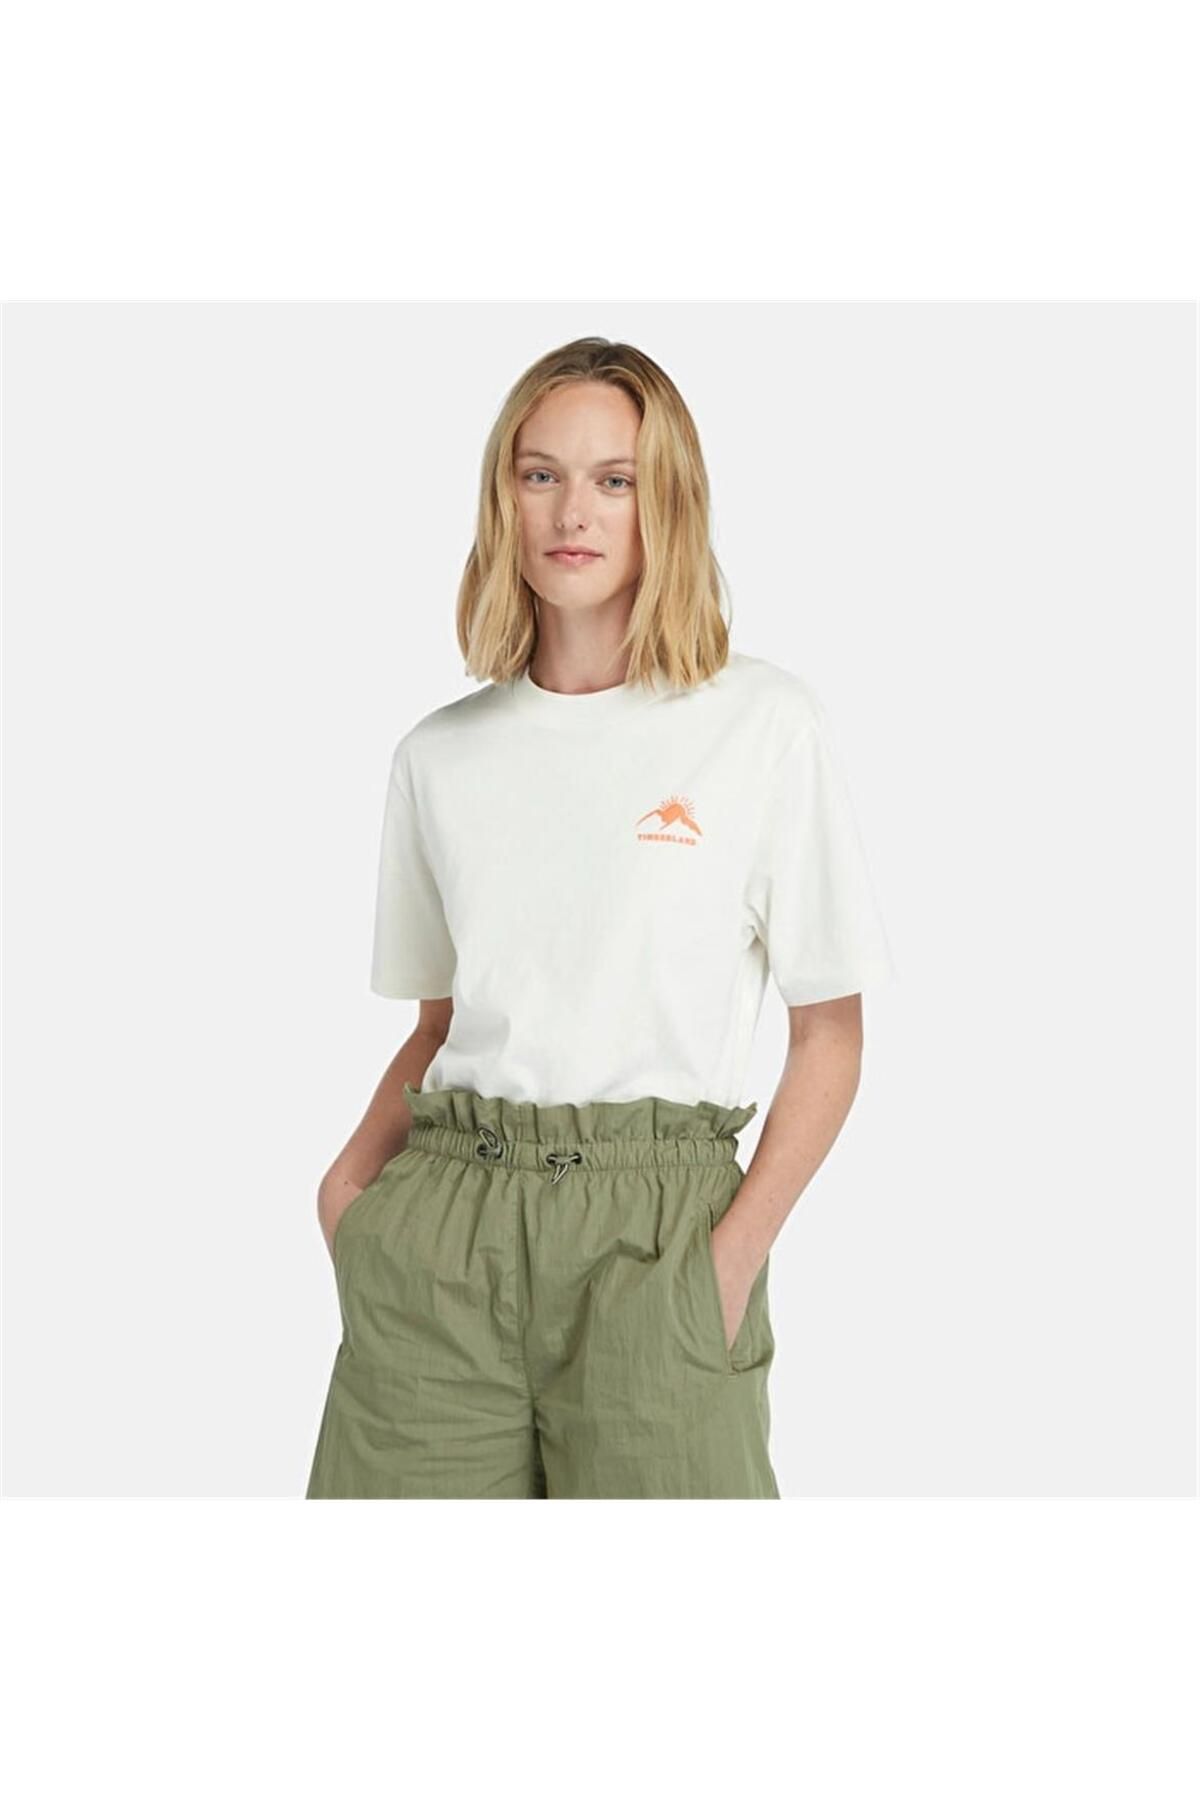 Timberland Hıke Lıfe Graphıc Short-Sleeve Tee Vıntage Whıte Kadın T-Shirt